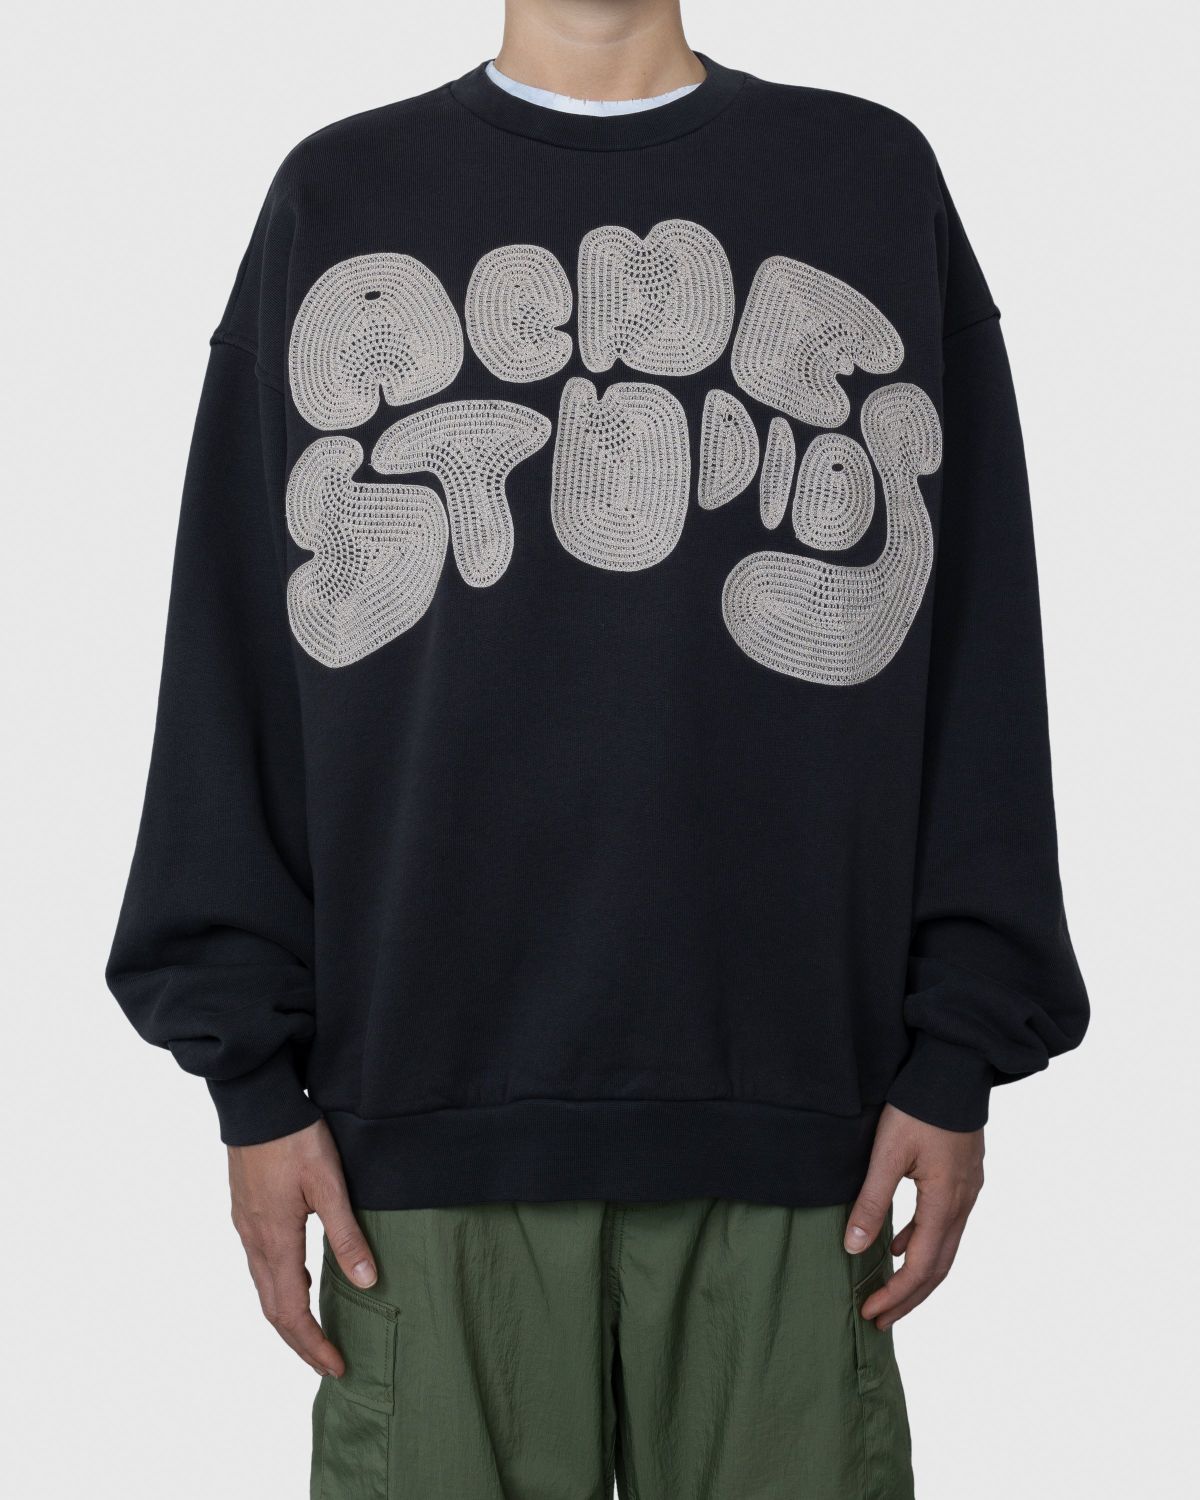 Acne Studios – Bubble Logo Crewneck Sweater Anthracite Grey - Knitwear - Black - Image 2